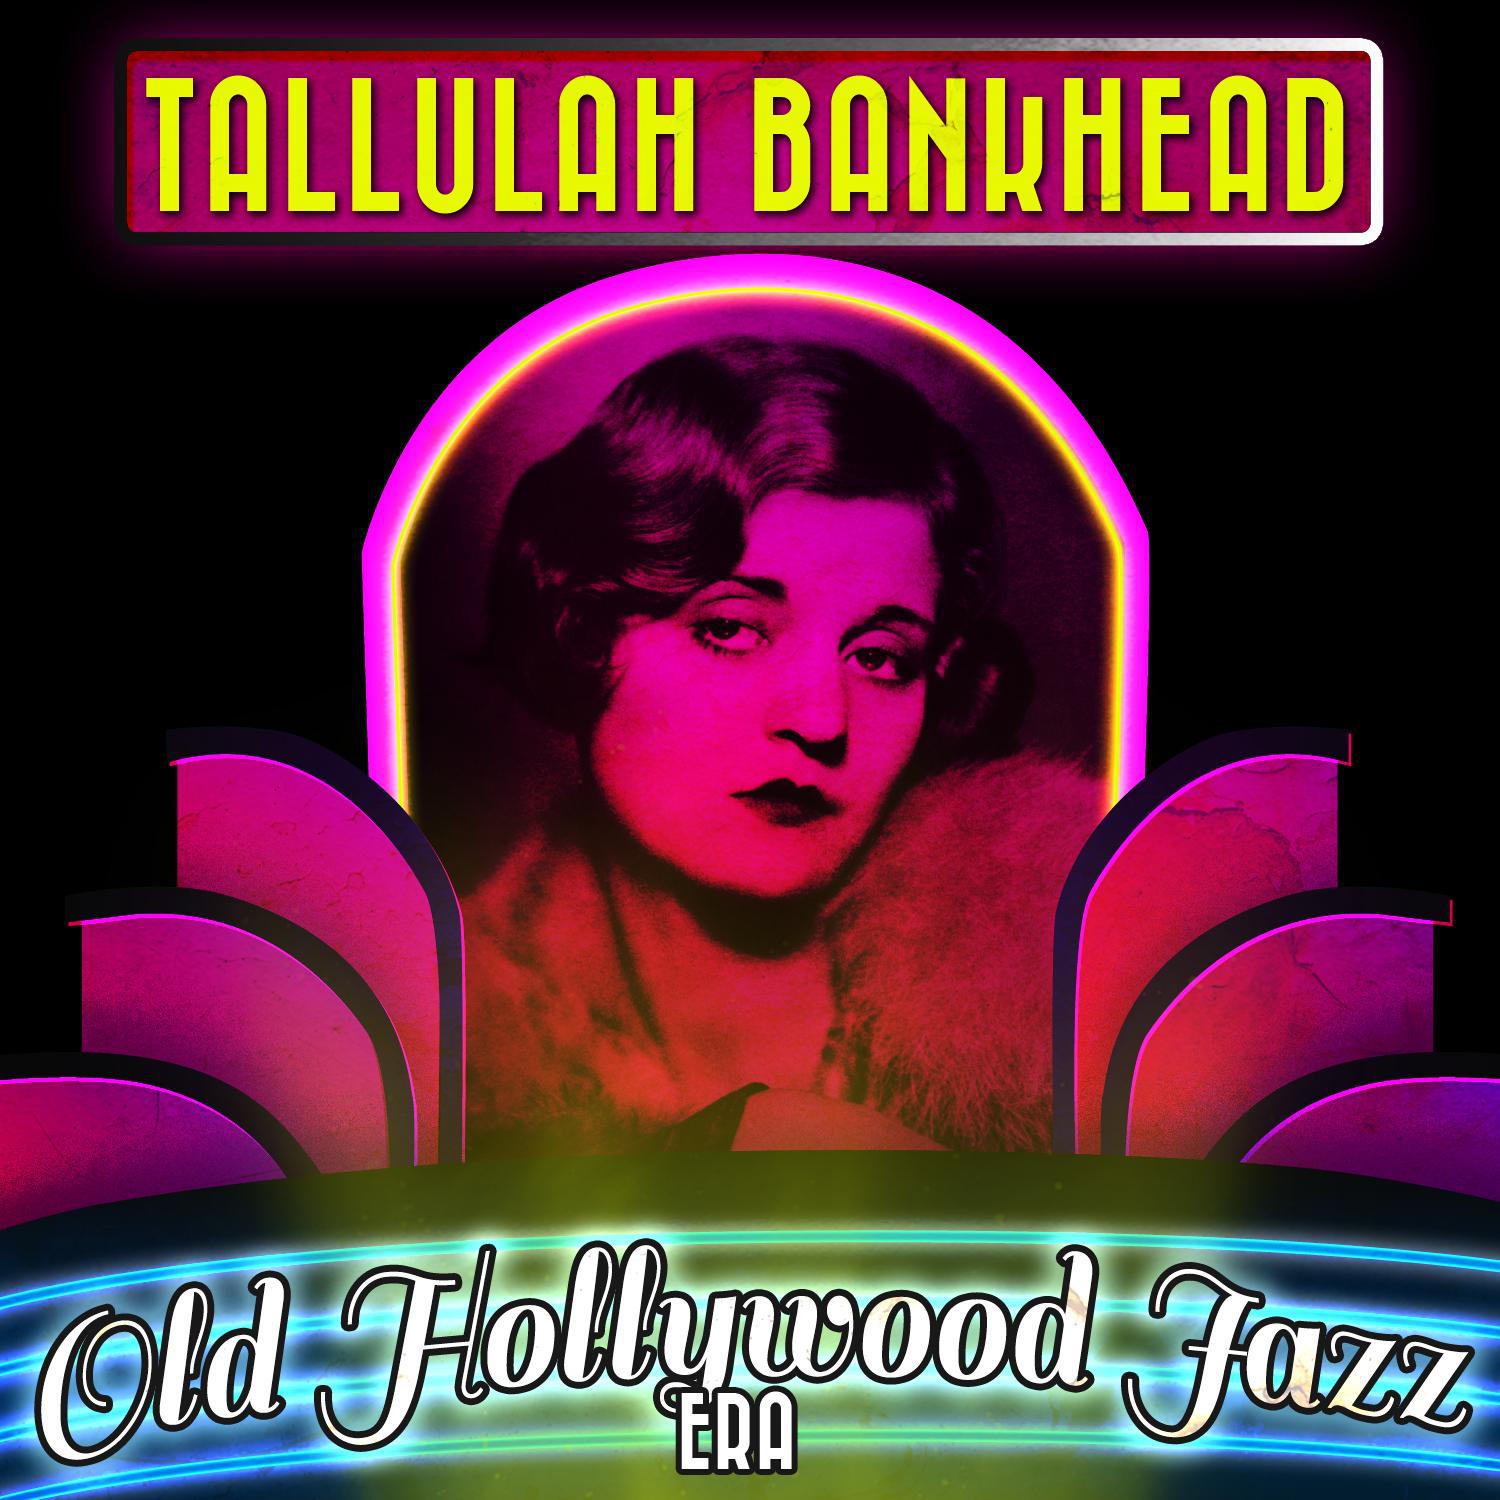 Tallulah Bankhead - The Big Show, Pt. 2